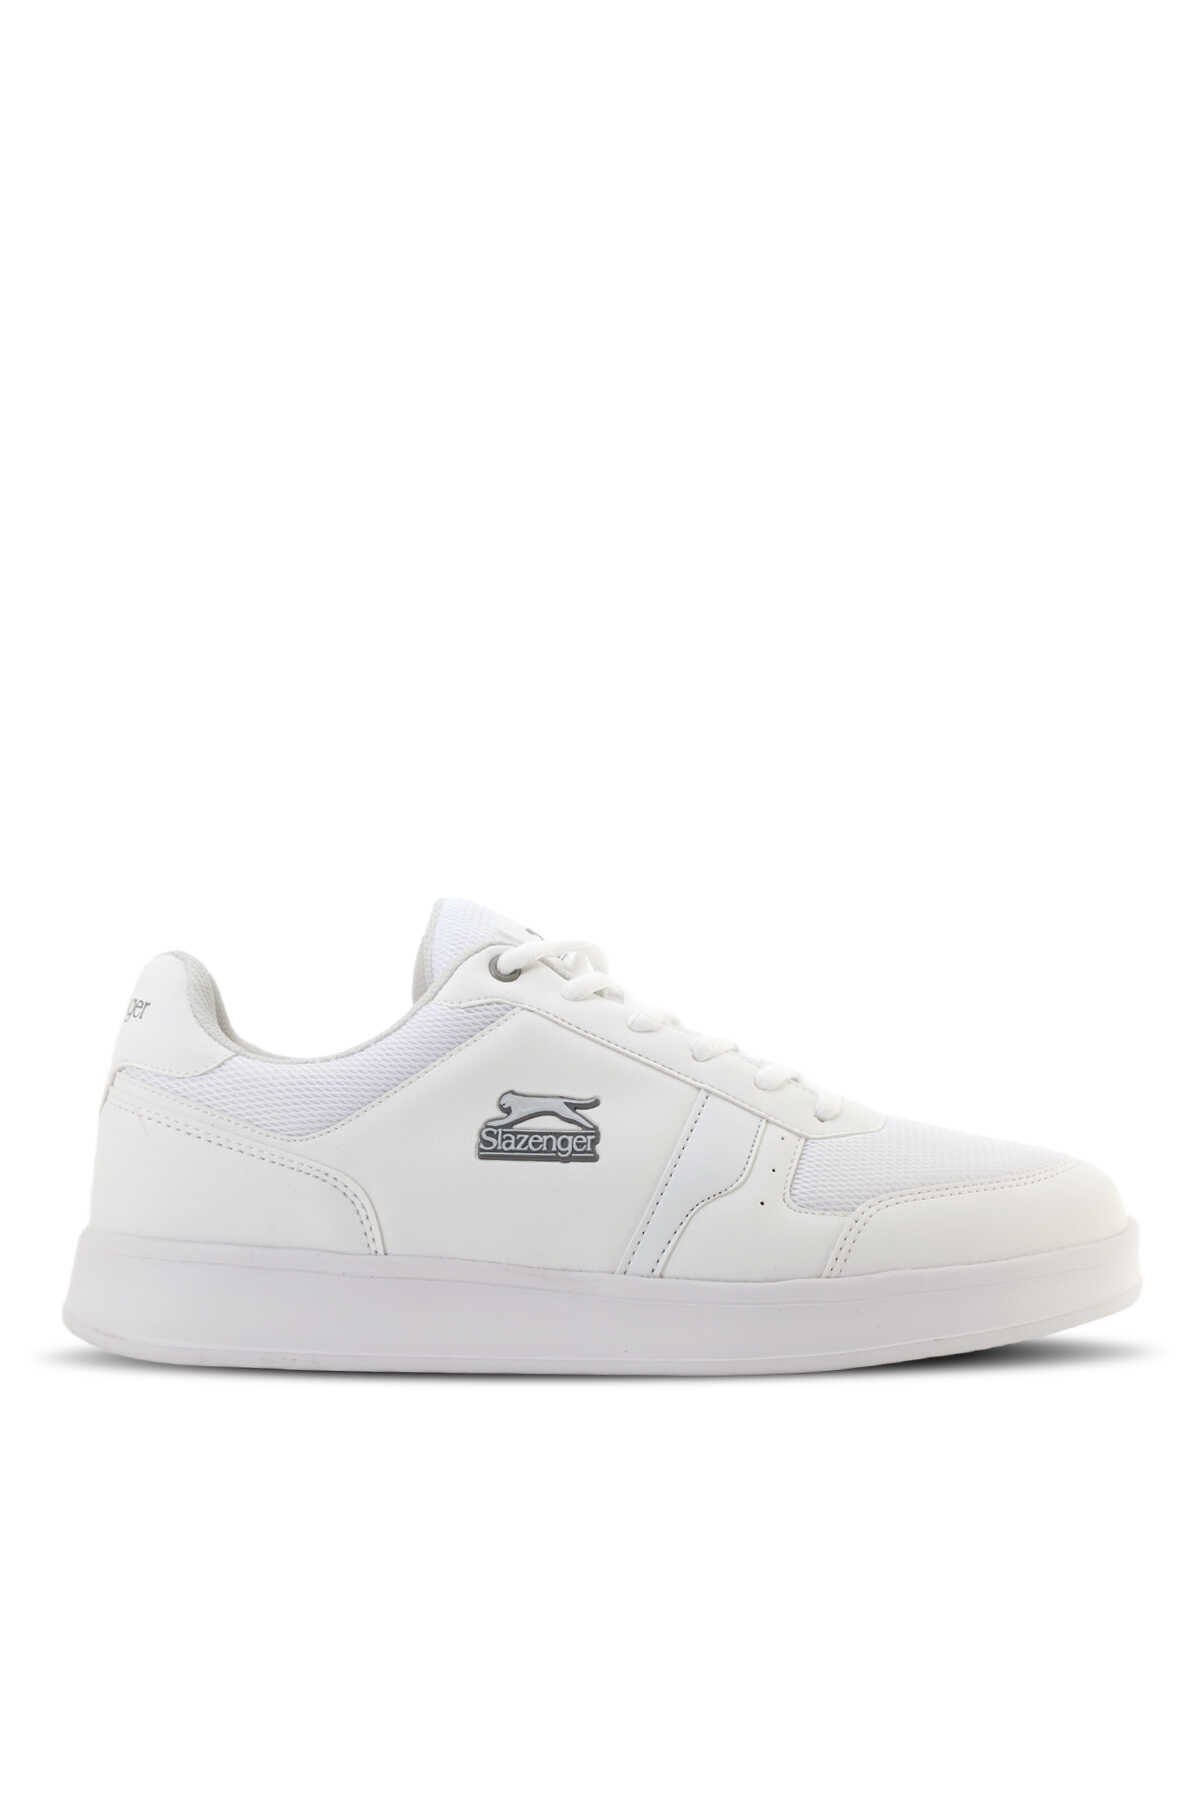 Slazenger - Slazenger ORVAL I Sneaker Erkek Ayakkabı Beyaz